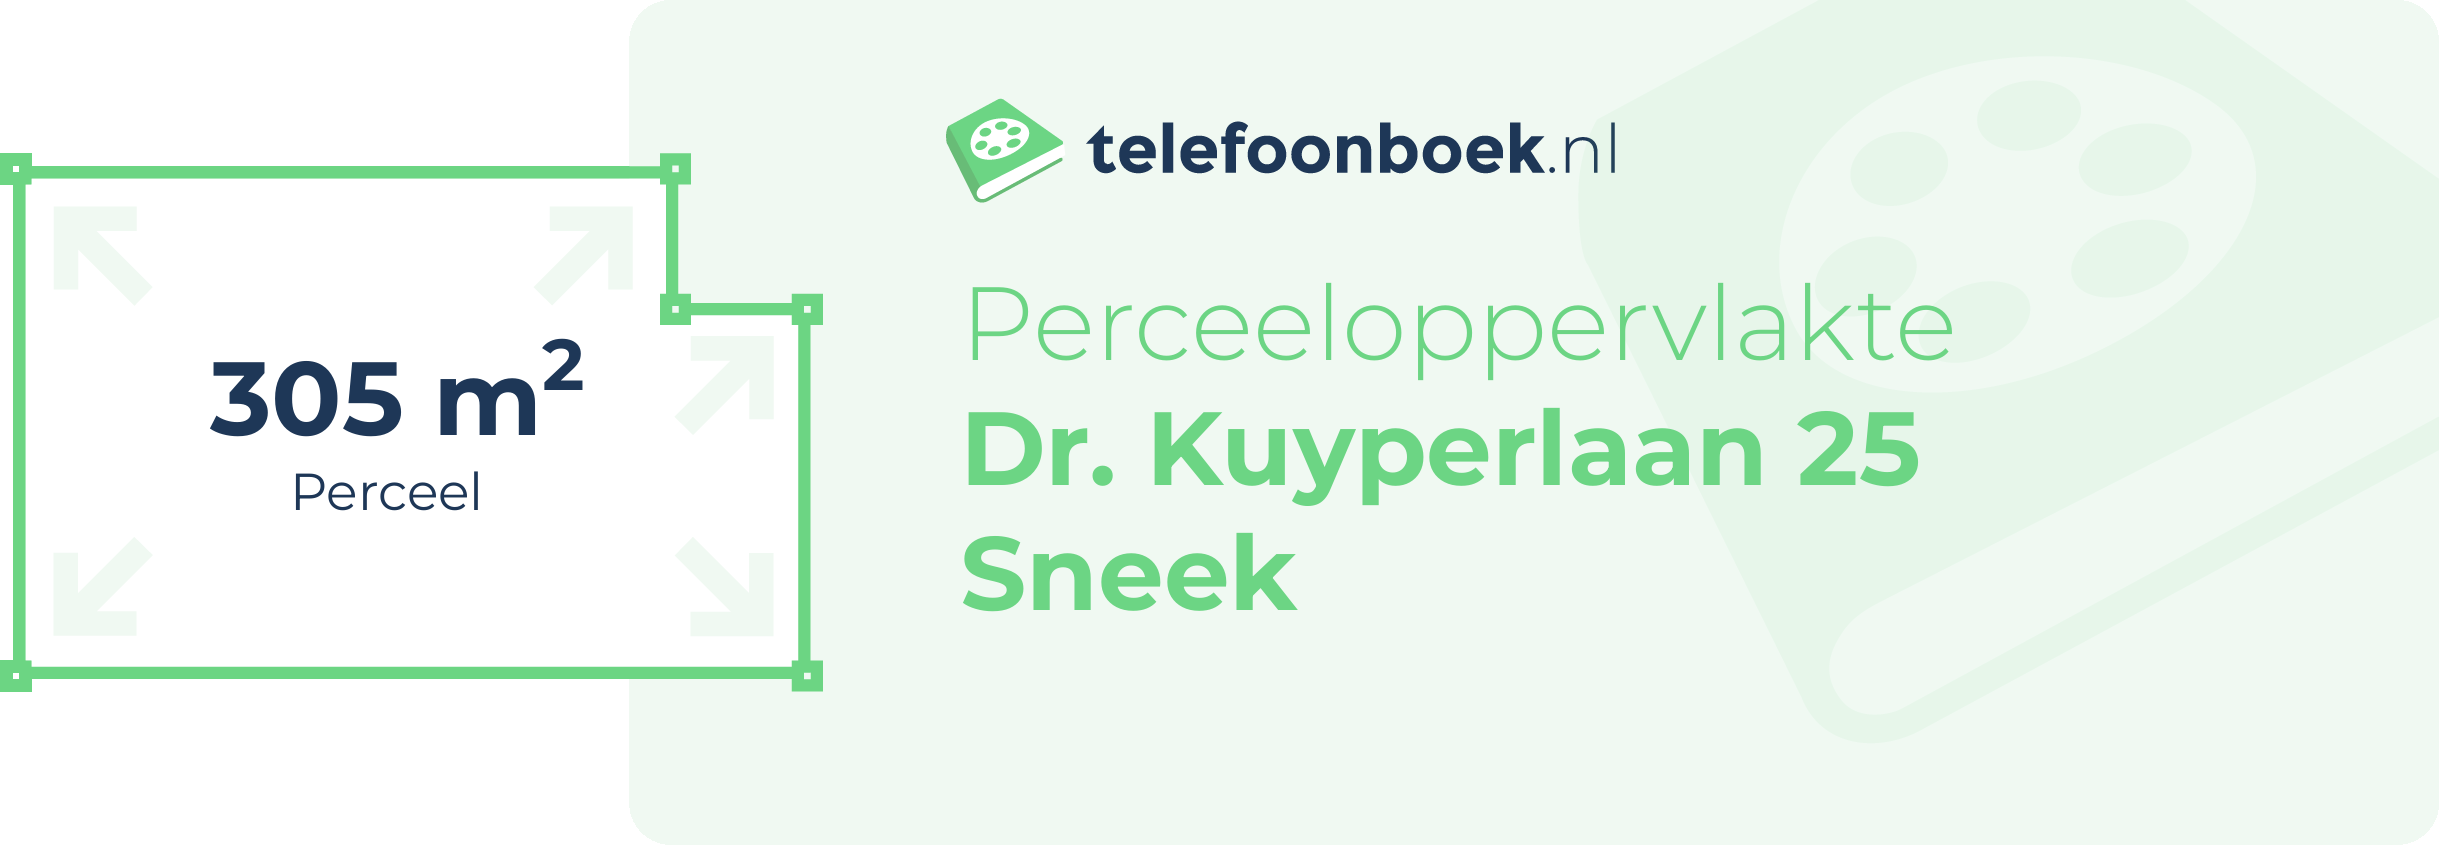 Perceeloppervlakte Dr. Kuyperlaan 25 Sneek